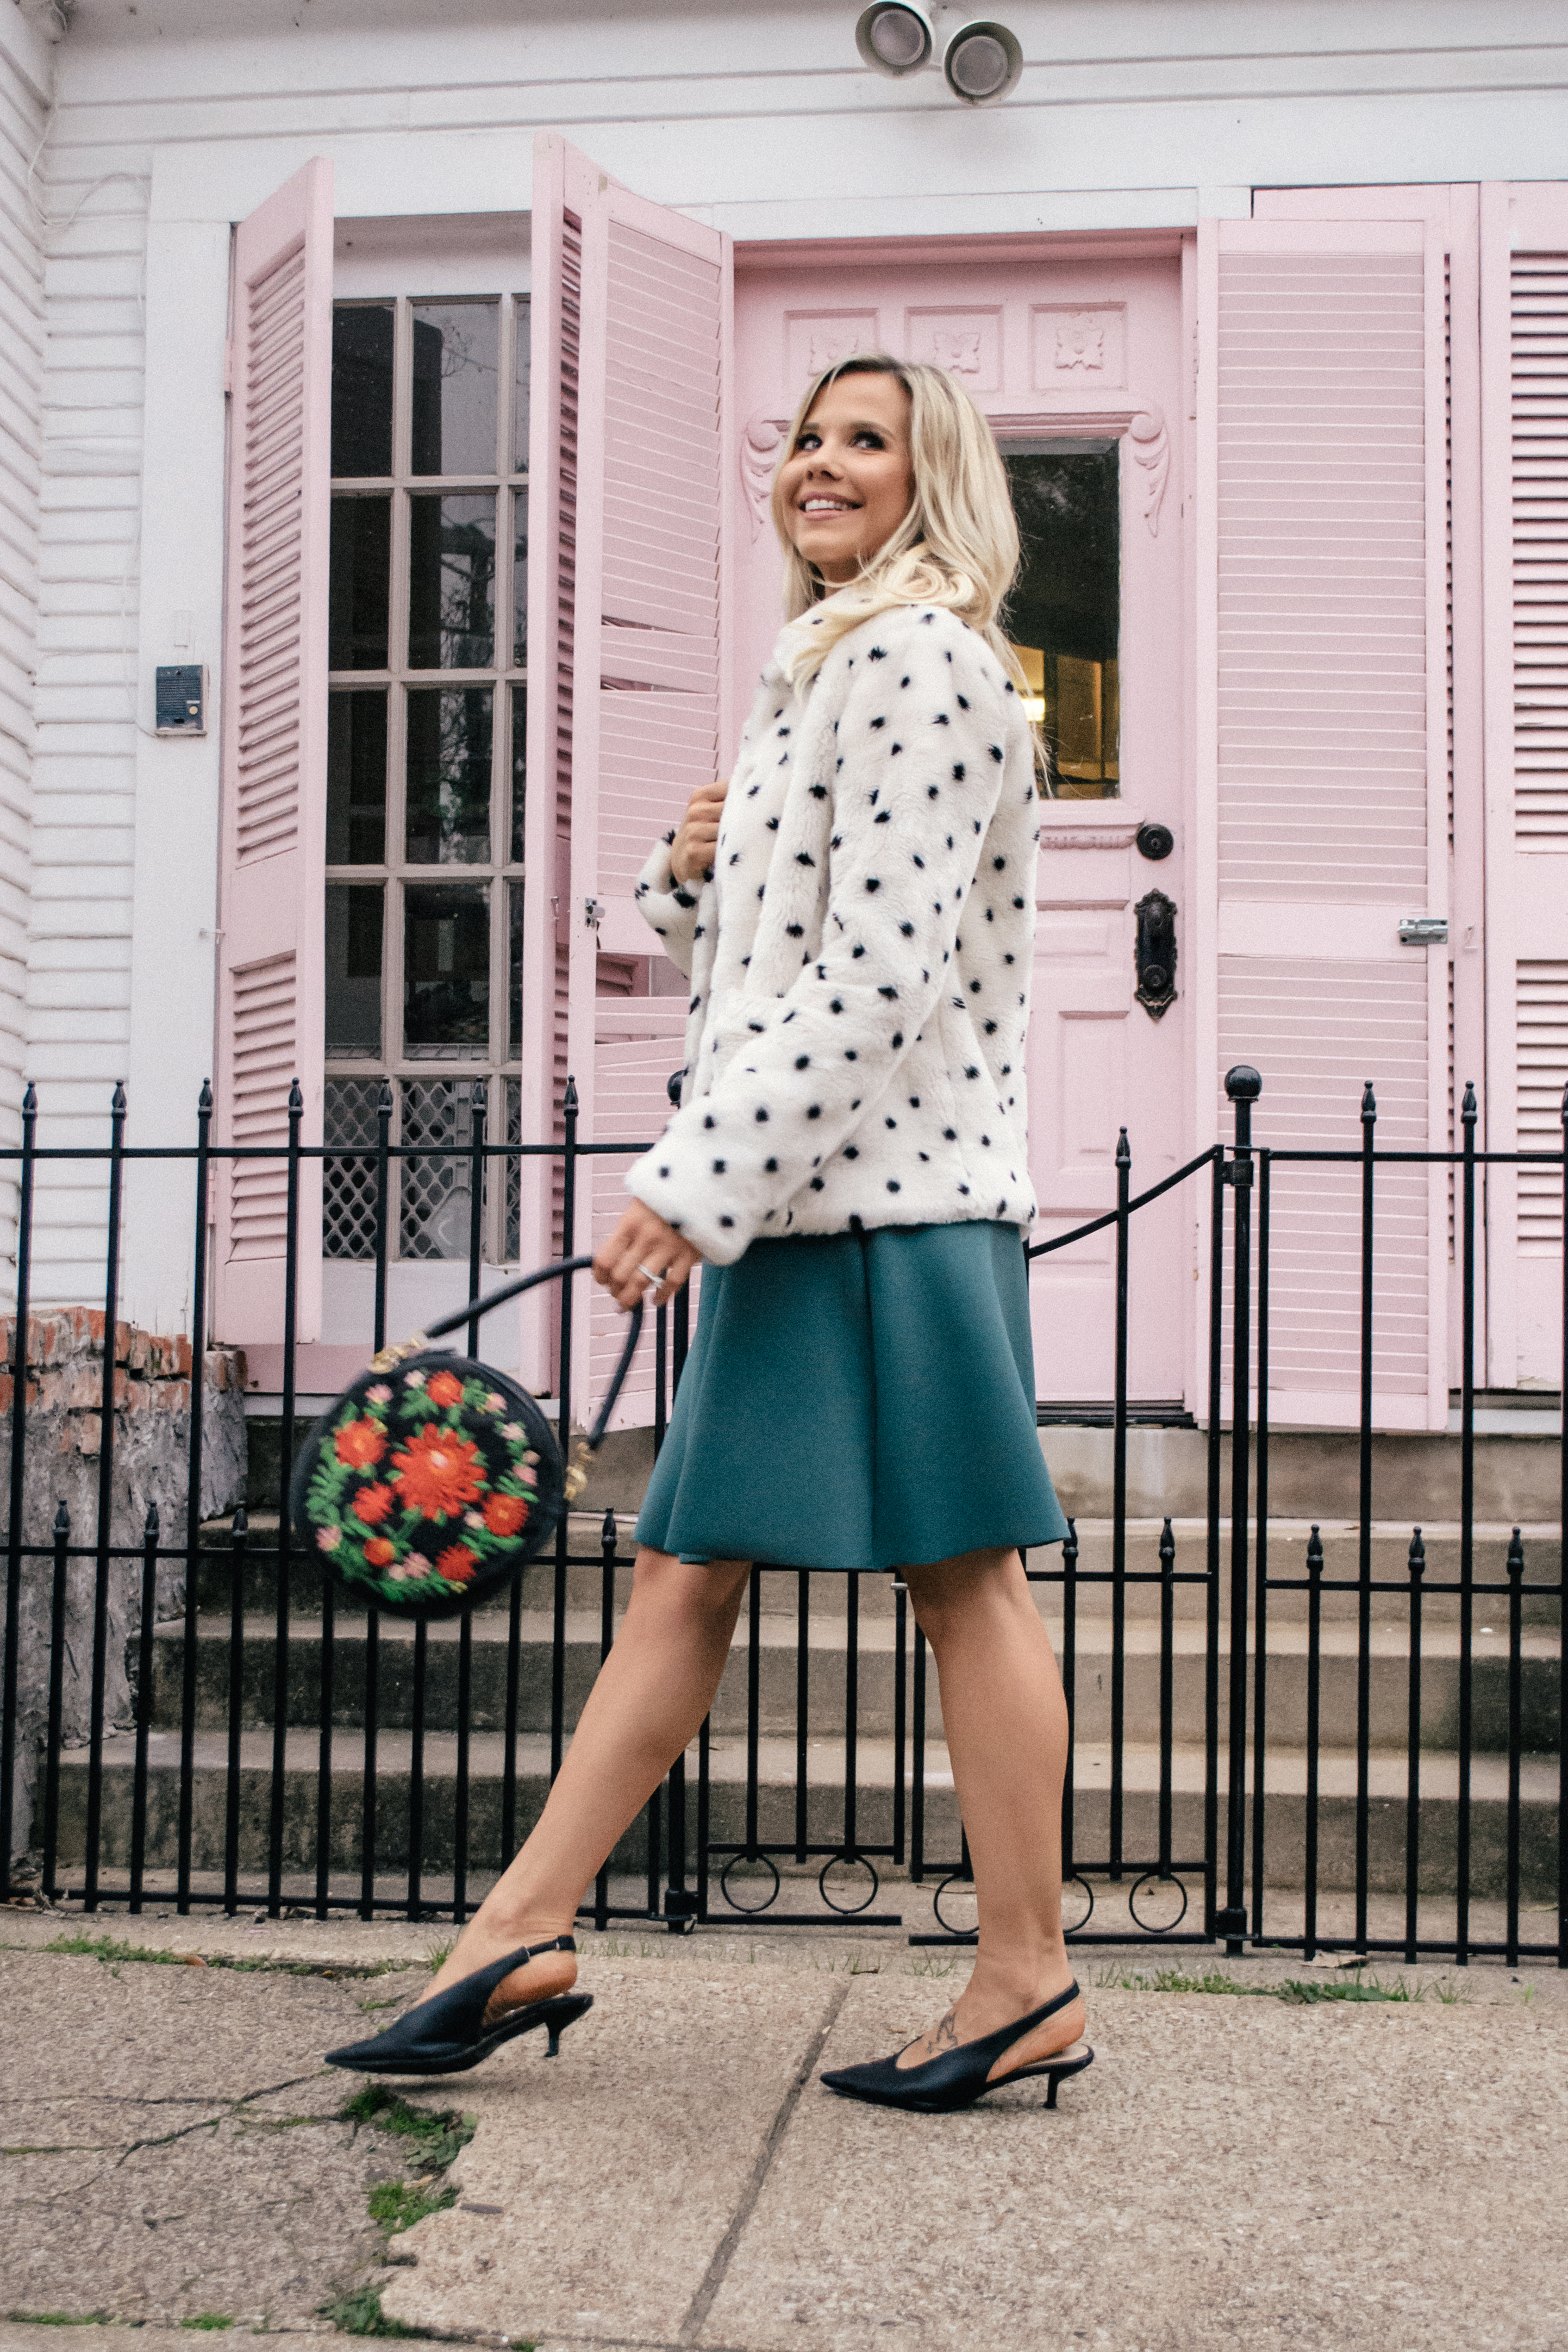 Feminine and girly style in polka dot faux fur coat #dallasblogger #glamlifeliving #fauxfurcoat